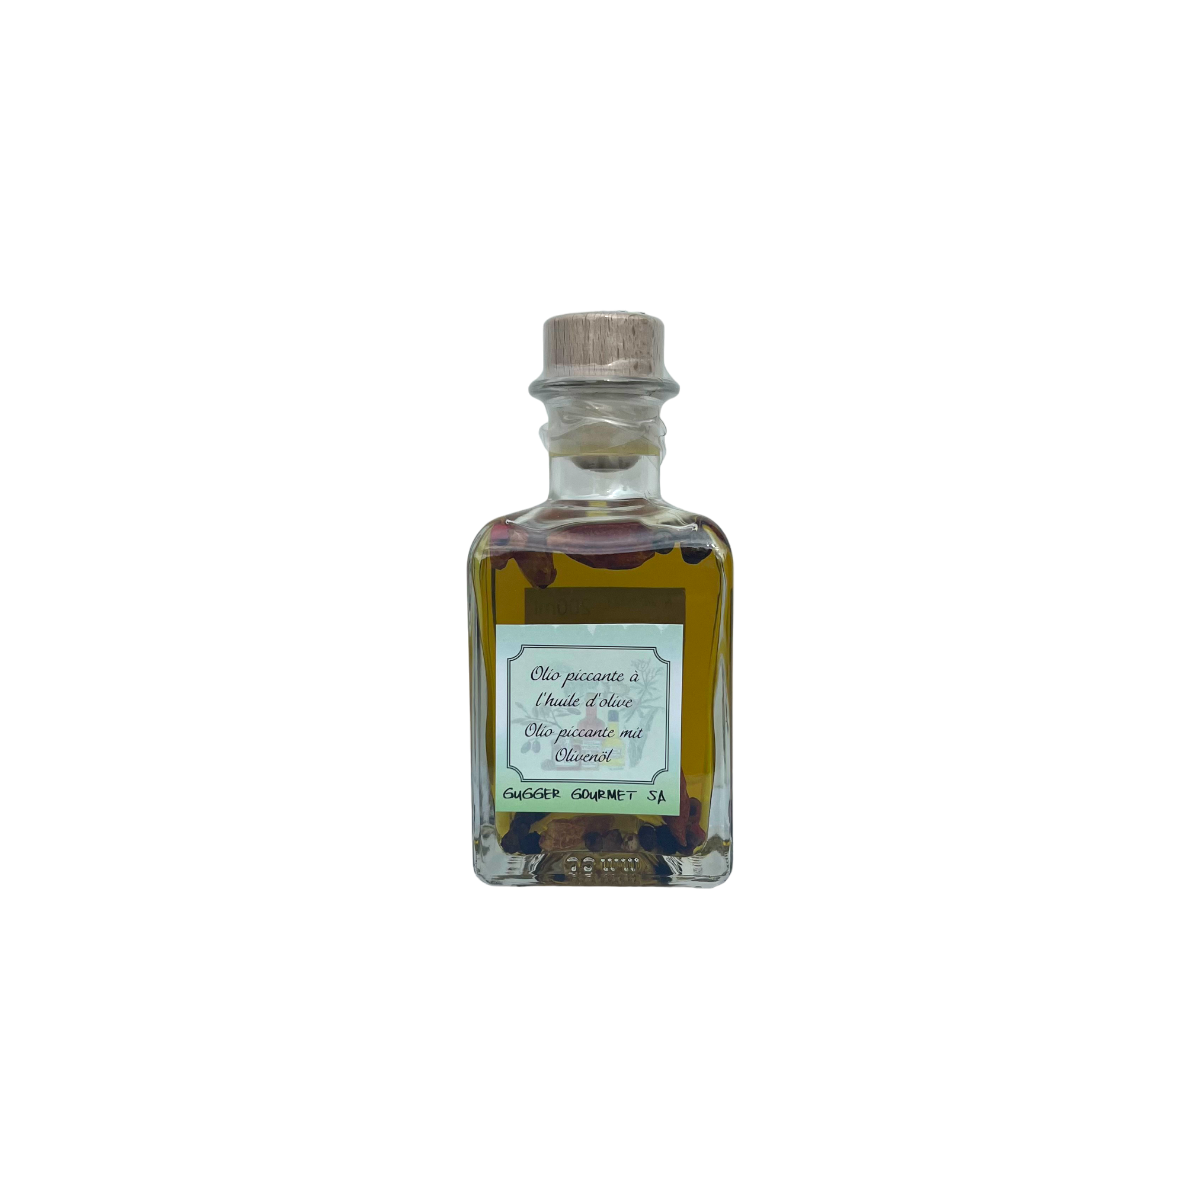 Olio piccante à l'huile d'olive